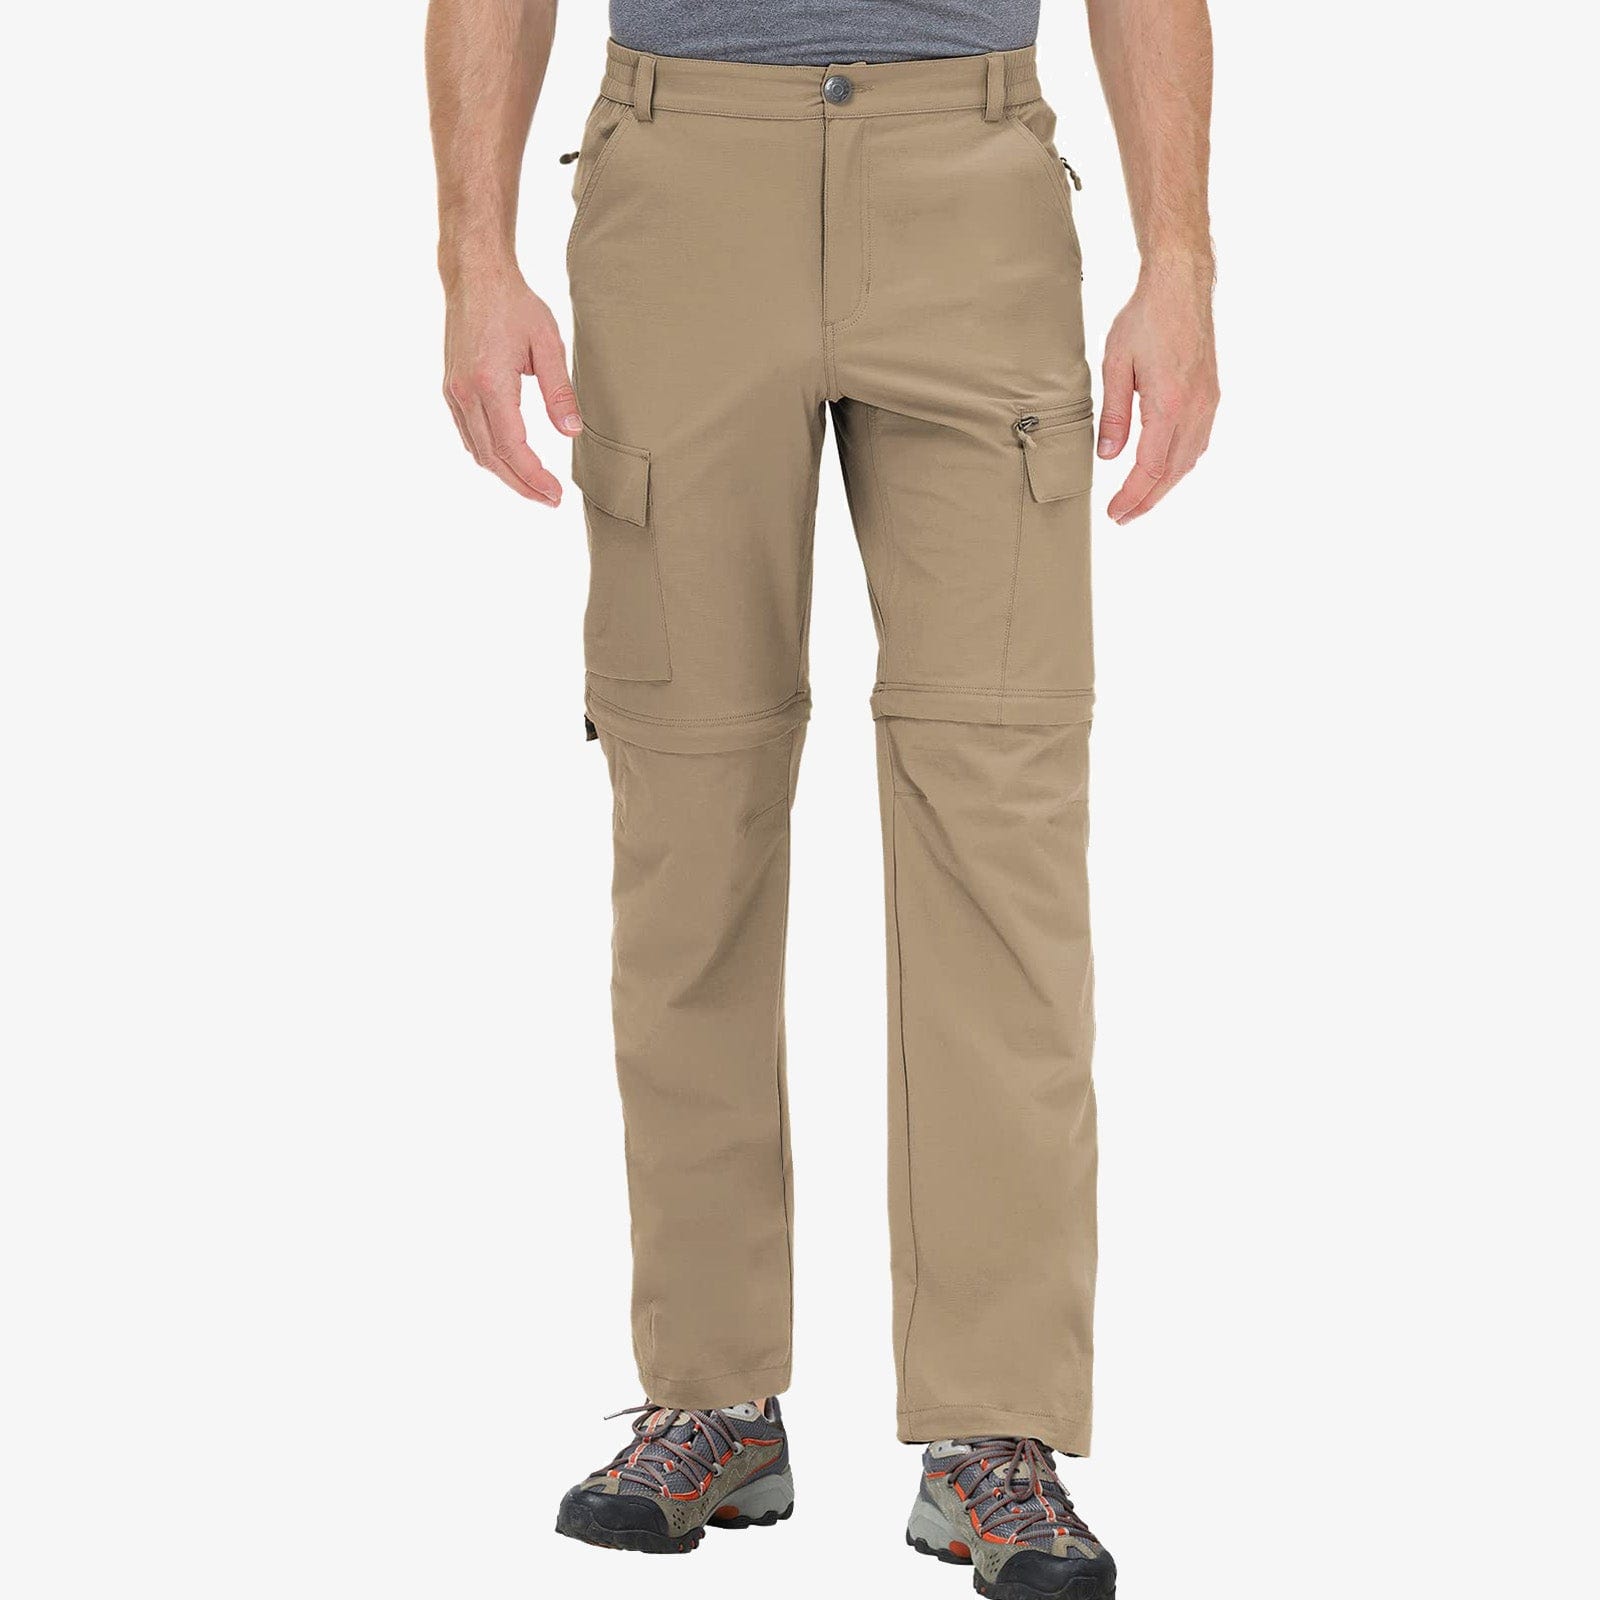 Men's Convertible Hiking Pants Zip Off Quick Dry Cargo Pants - Khaki / 30